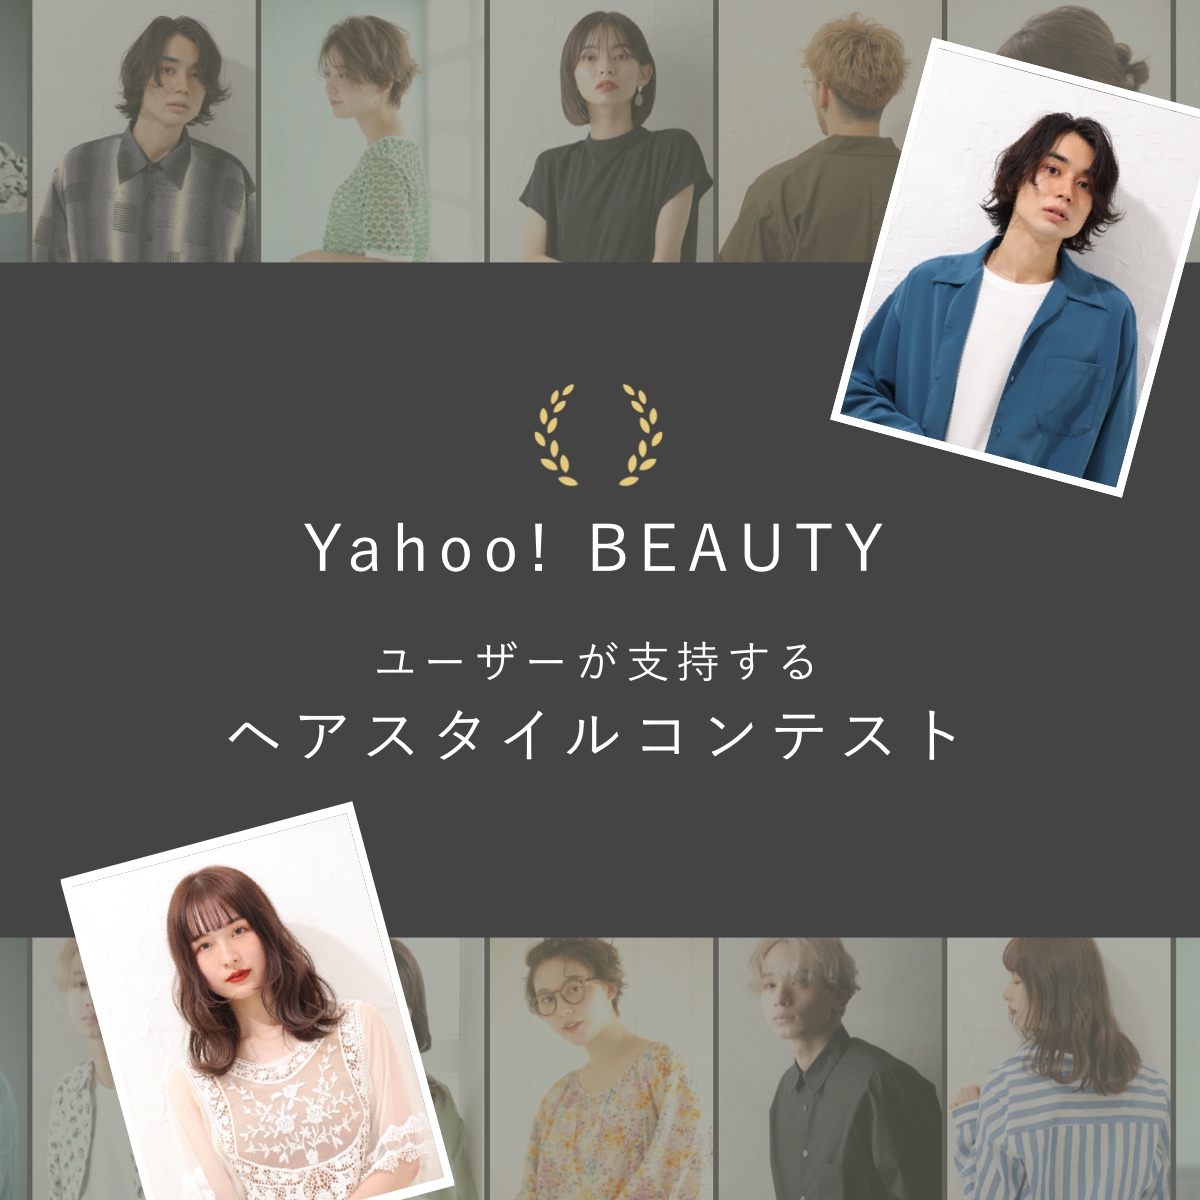 Yahoo Beauty 登録スタイリストが参加する ユーザーが支持するヘアスタイルコンテスト Yahoo Beauty